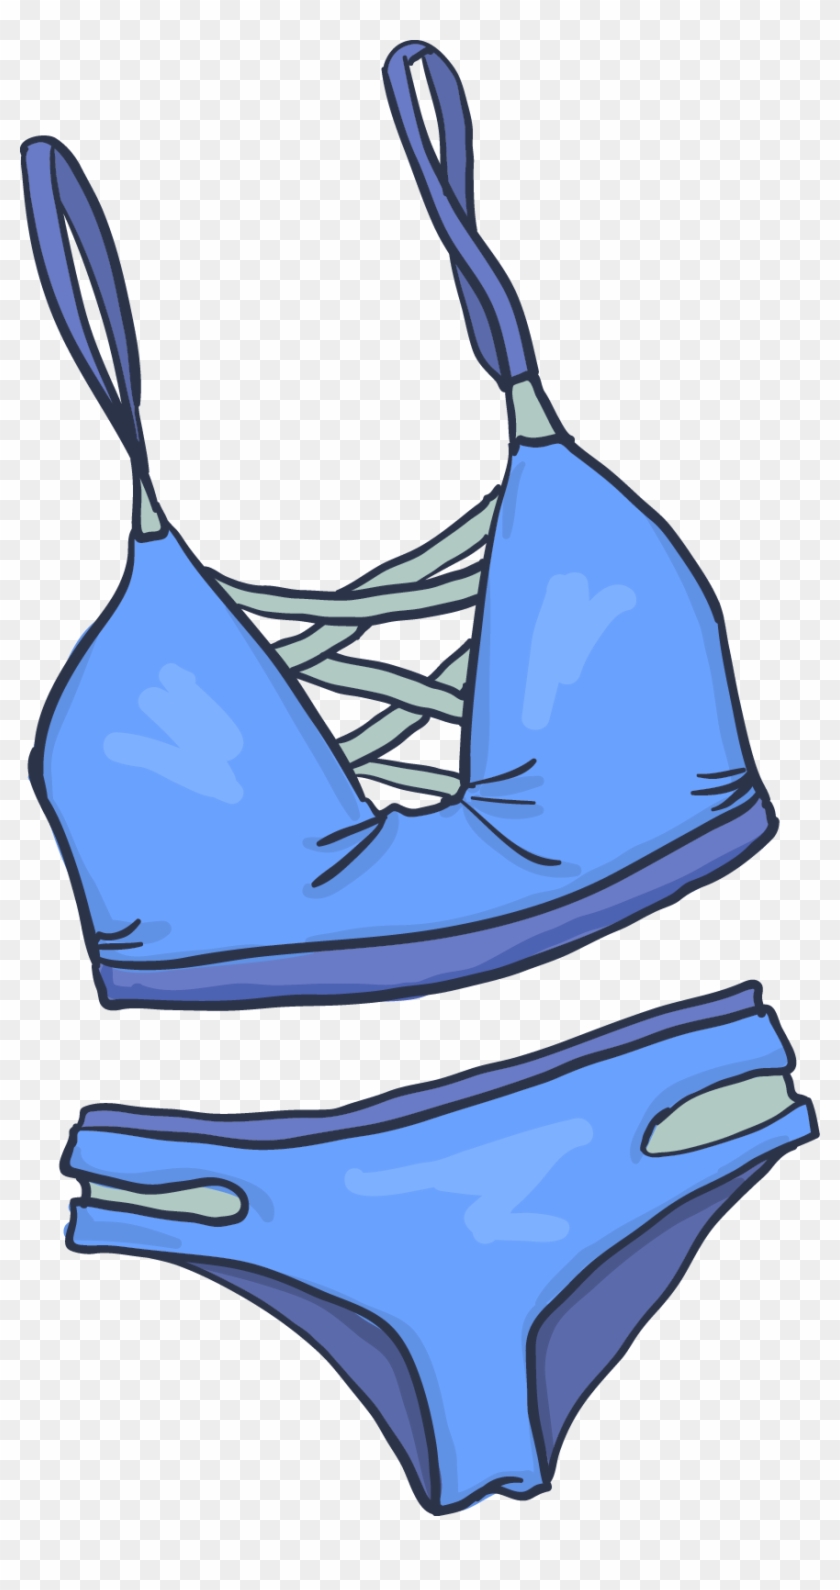 Bikini Clip Art - Bikini Clip Art - Free Transparent PNG Clipart Imag...